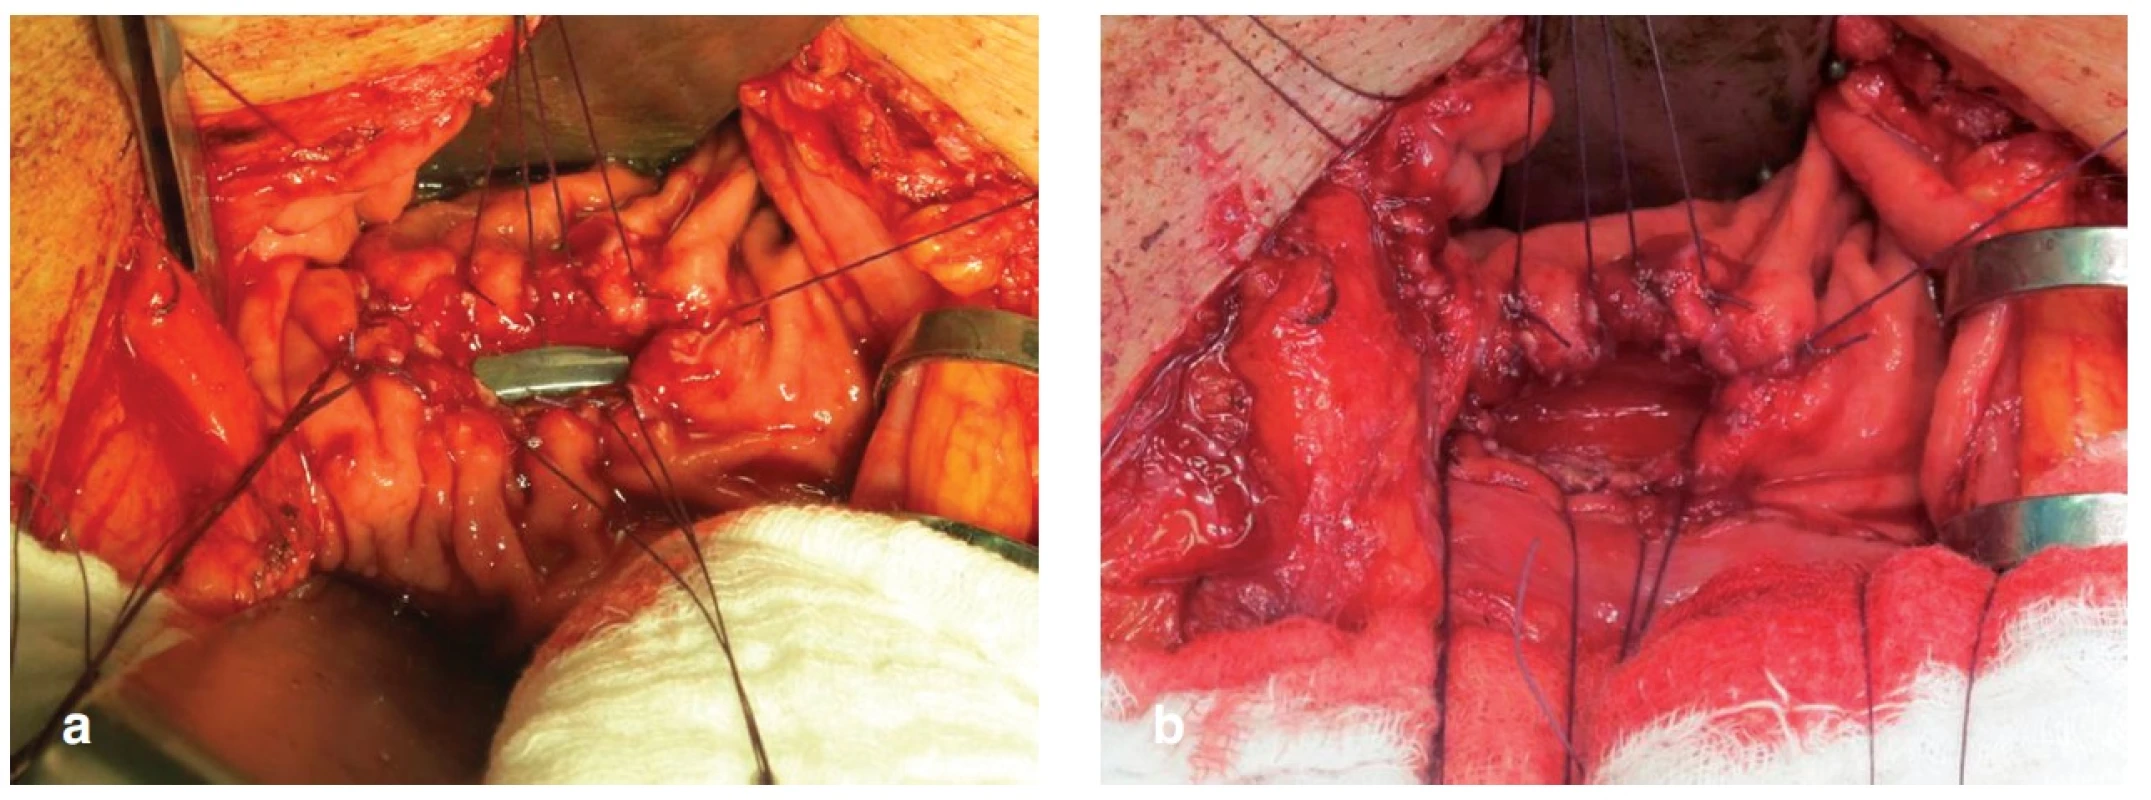 Kazuistika 1 – a) zadní gastrotomie nad zavedeným drénem, b) po vytažení drénu
Fig. 4: Case 1 – a) posterior gastrotomy over the drainage tube, b) drainage tube extraction